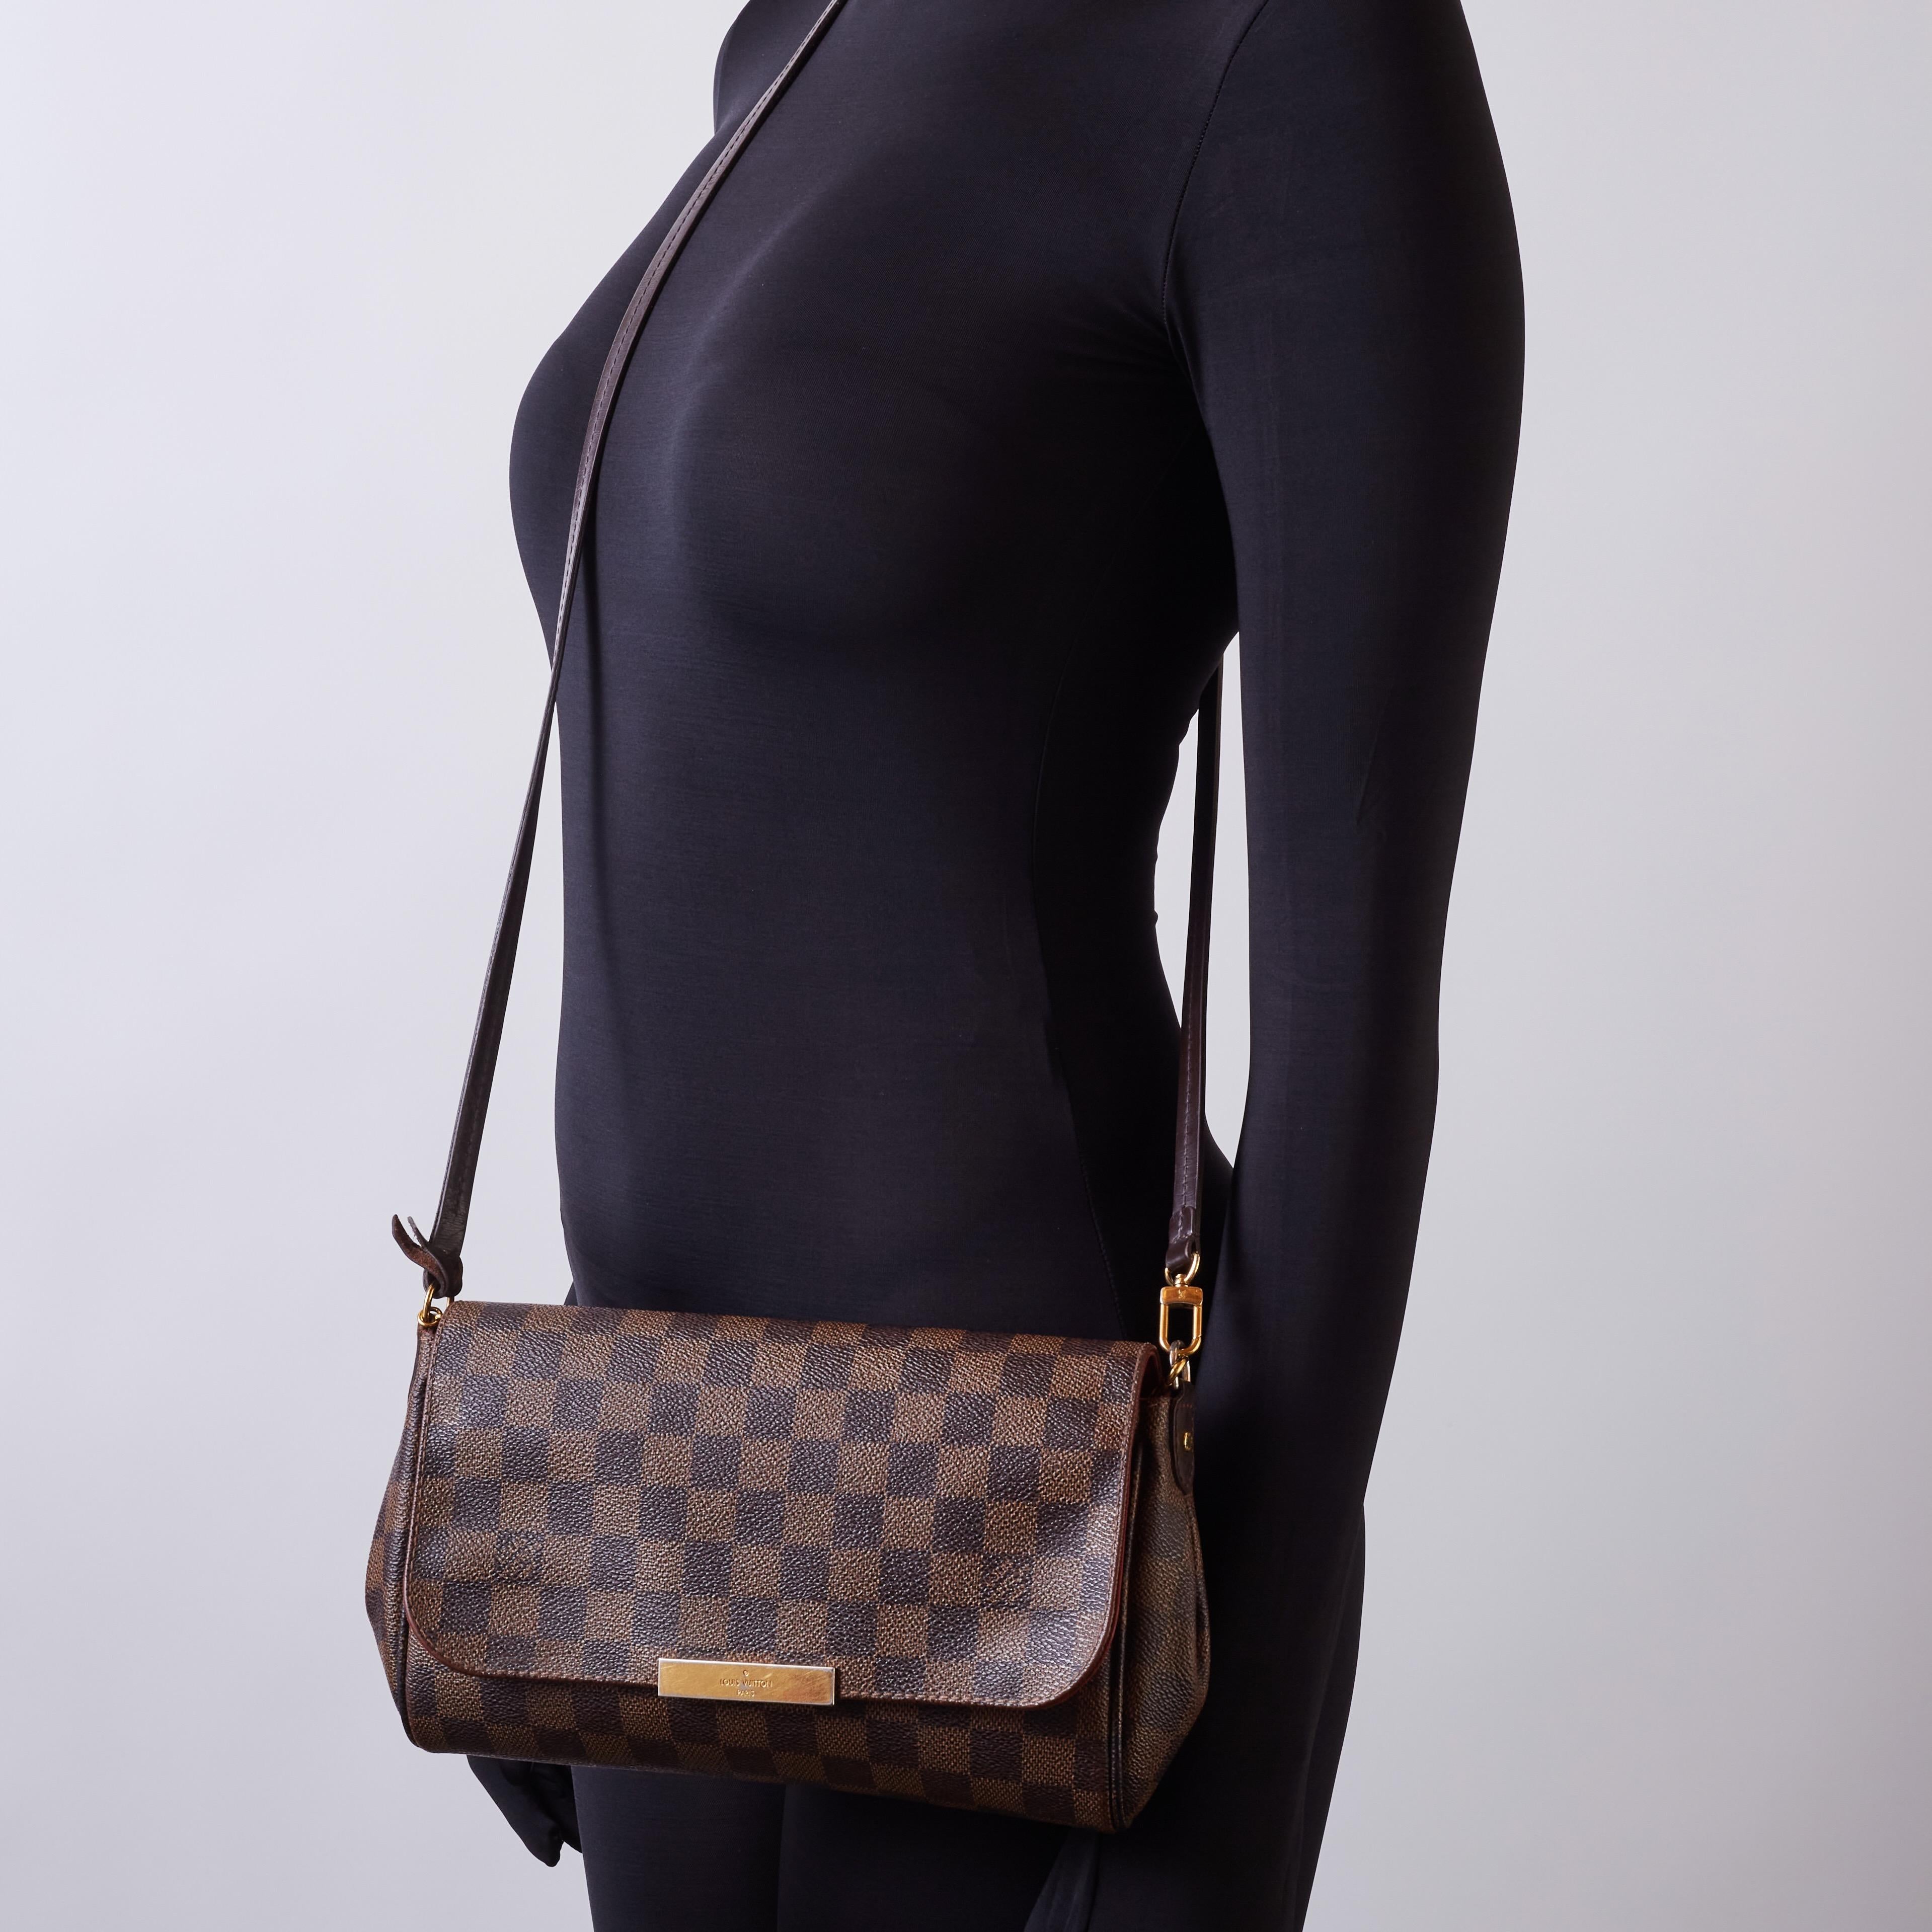 Louis Vuitton Damier Ebene Favorite Mm Shoulder Bag In Good Condition For Sale In Montreal, Quebec